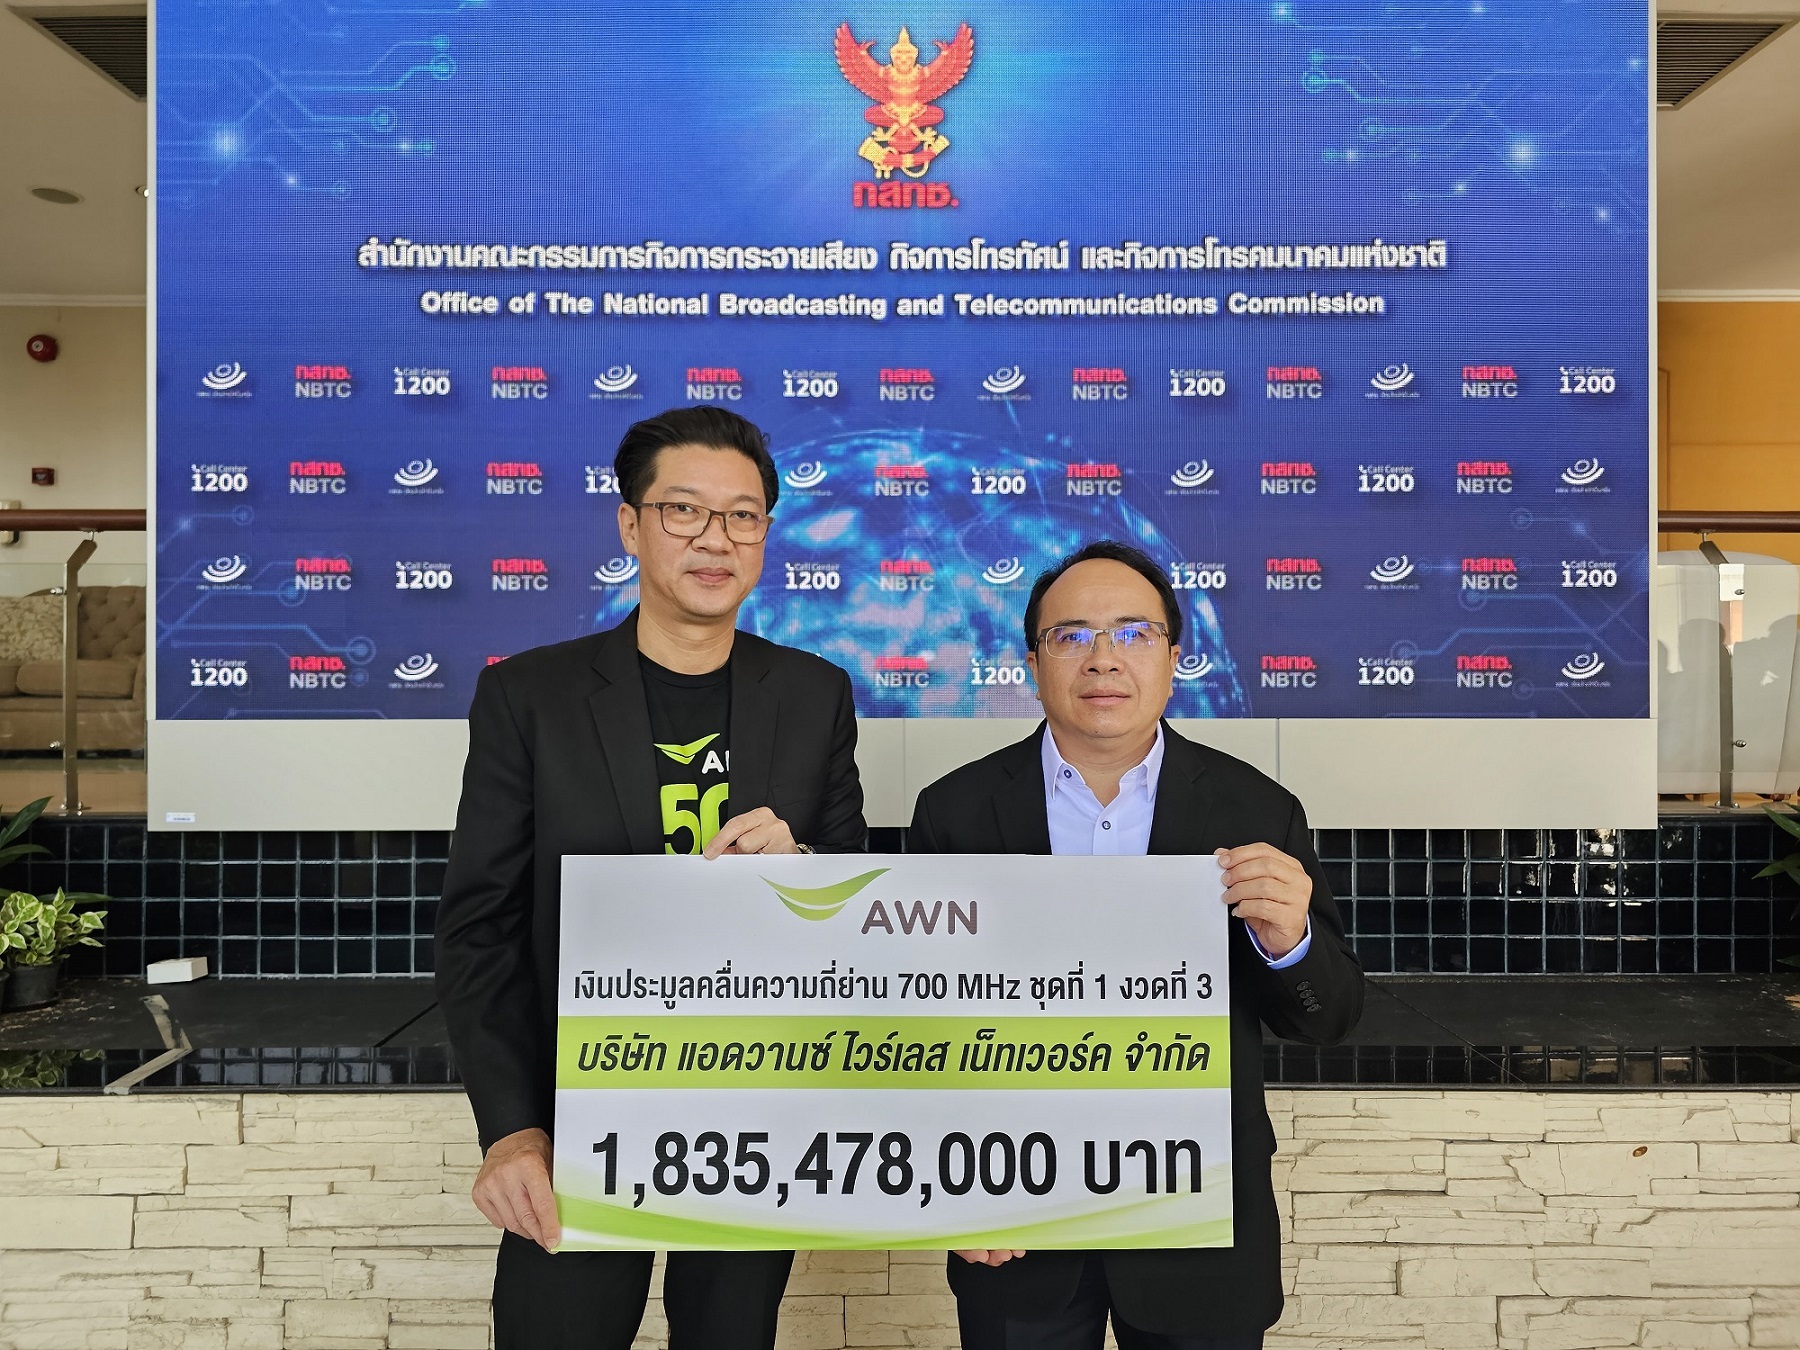 AIS ชำระเงินค่าใบอนุญาต คลื่นความถี่ 700 MHz ชุดที่ 1 งวด 3 ย้ำมีคลื่นความถี่ครบและมากสุดในไทย 1460 MHz 